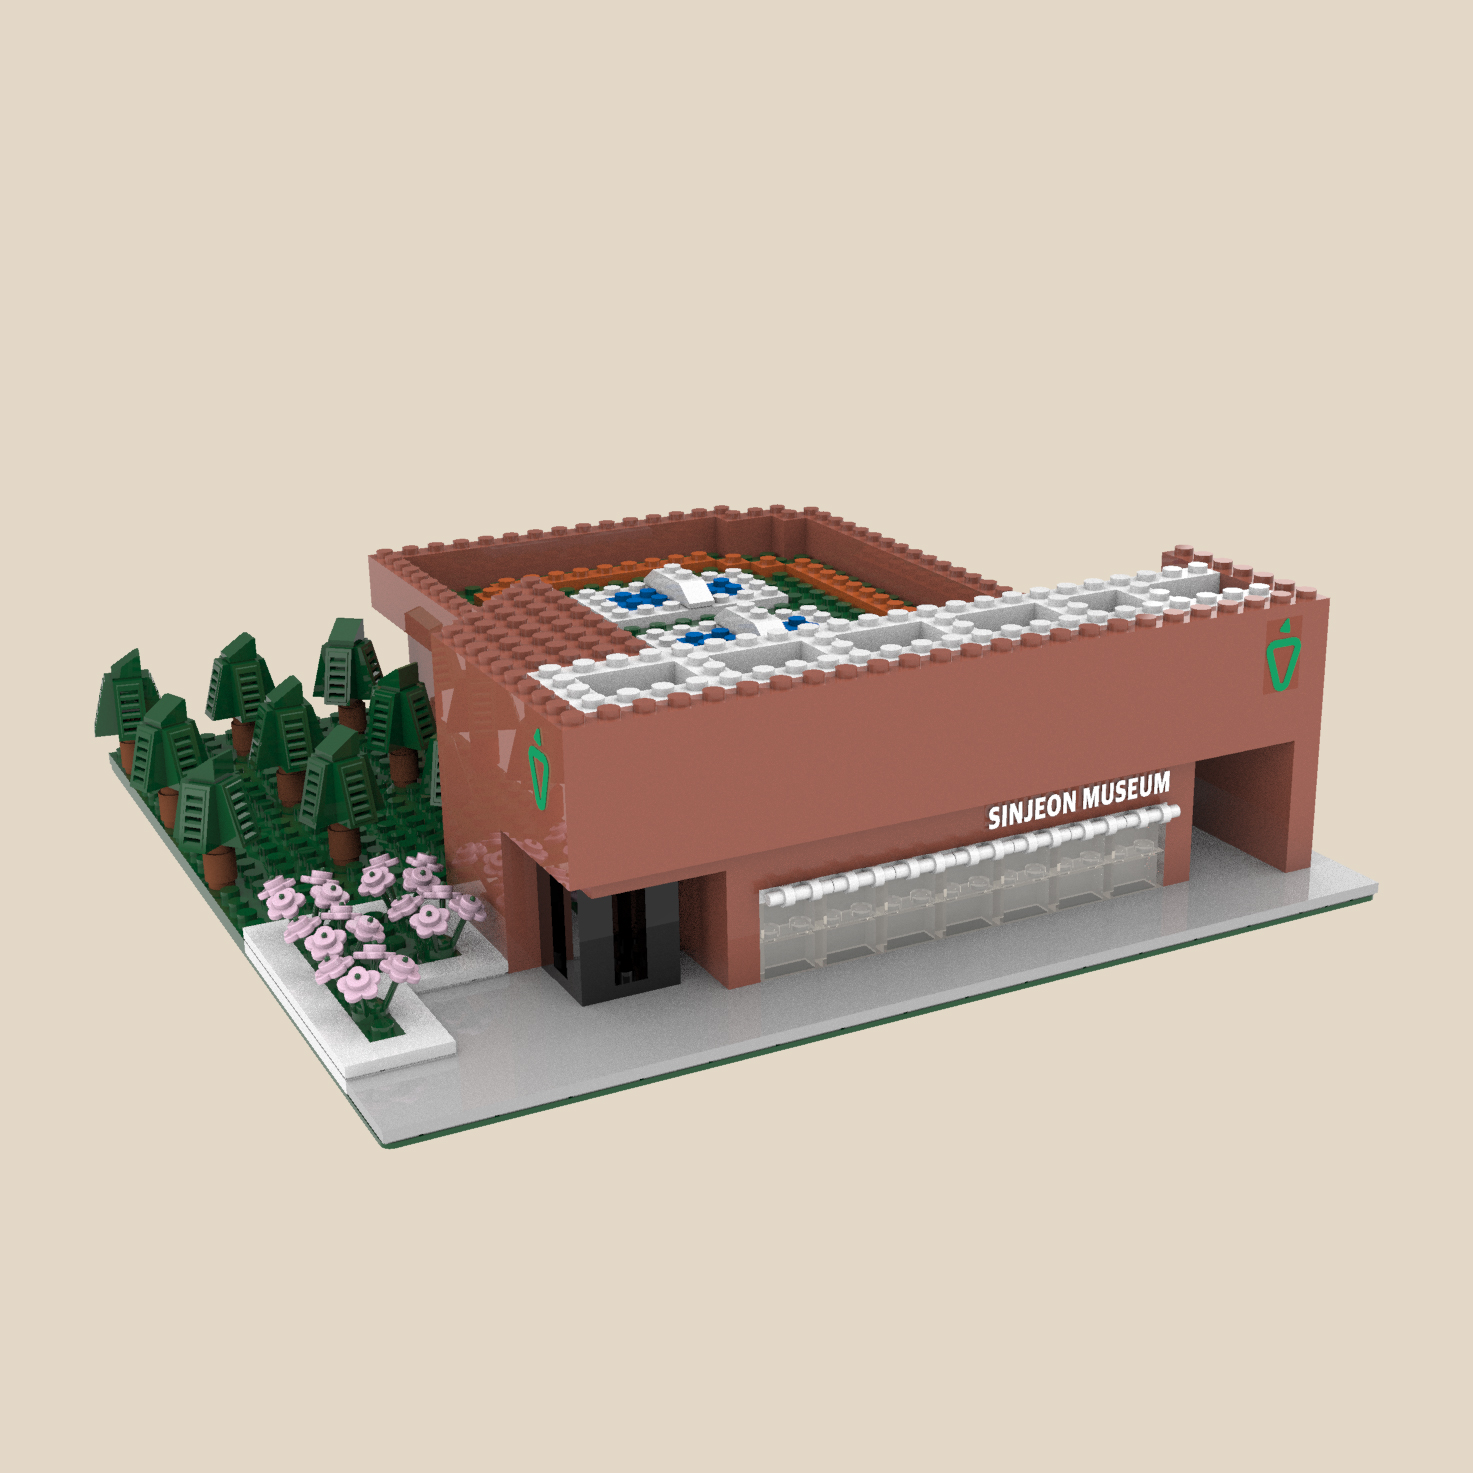 [Lego] Museum lego